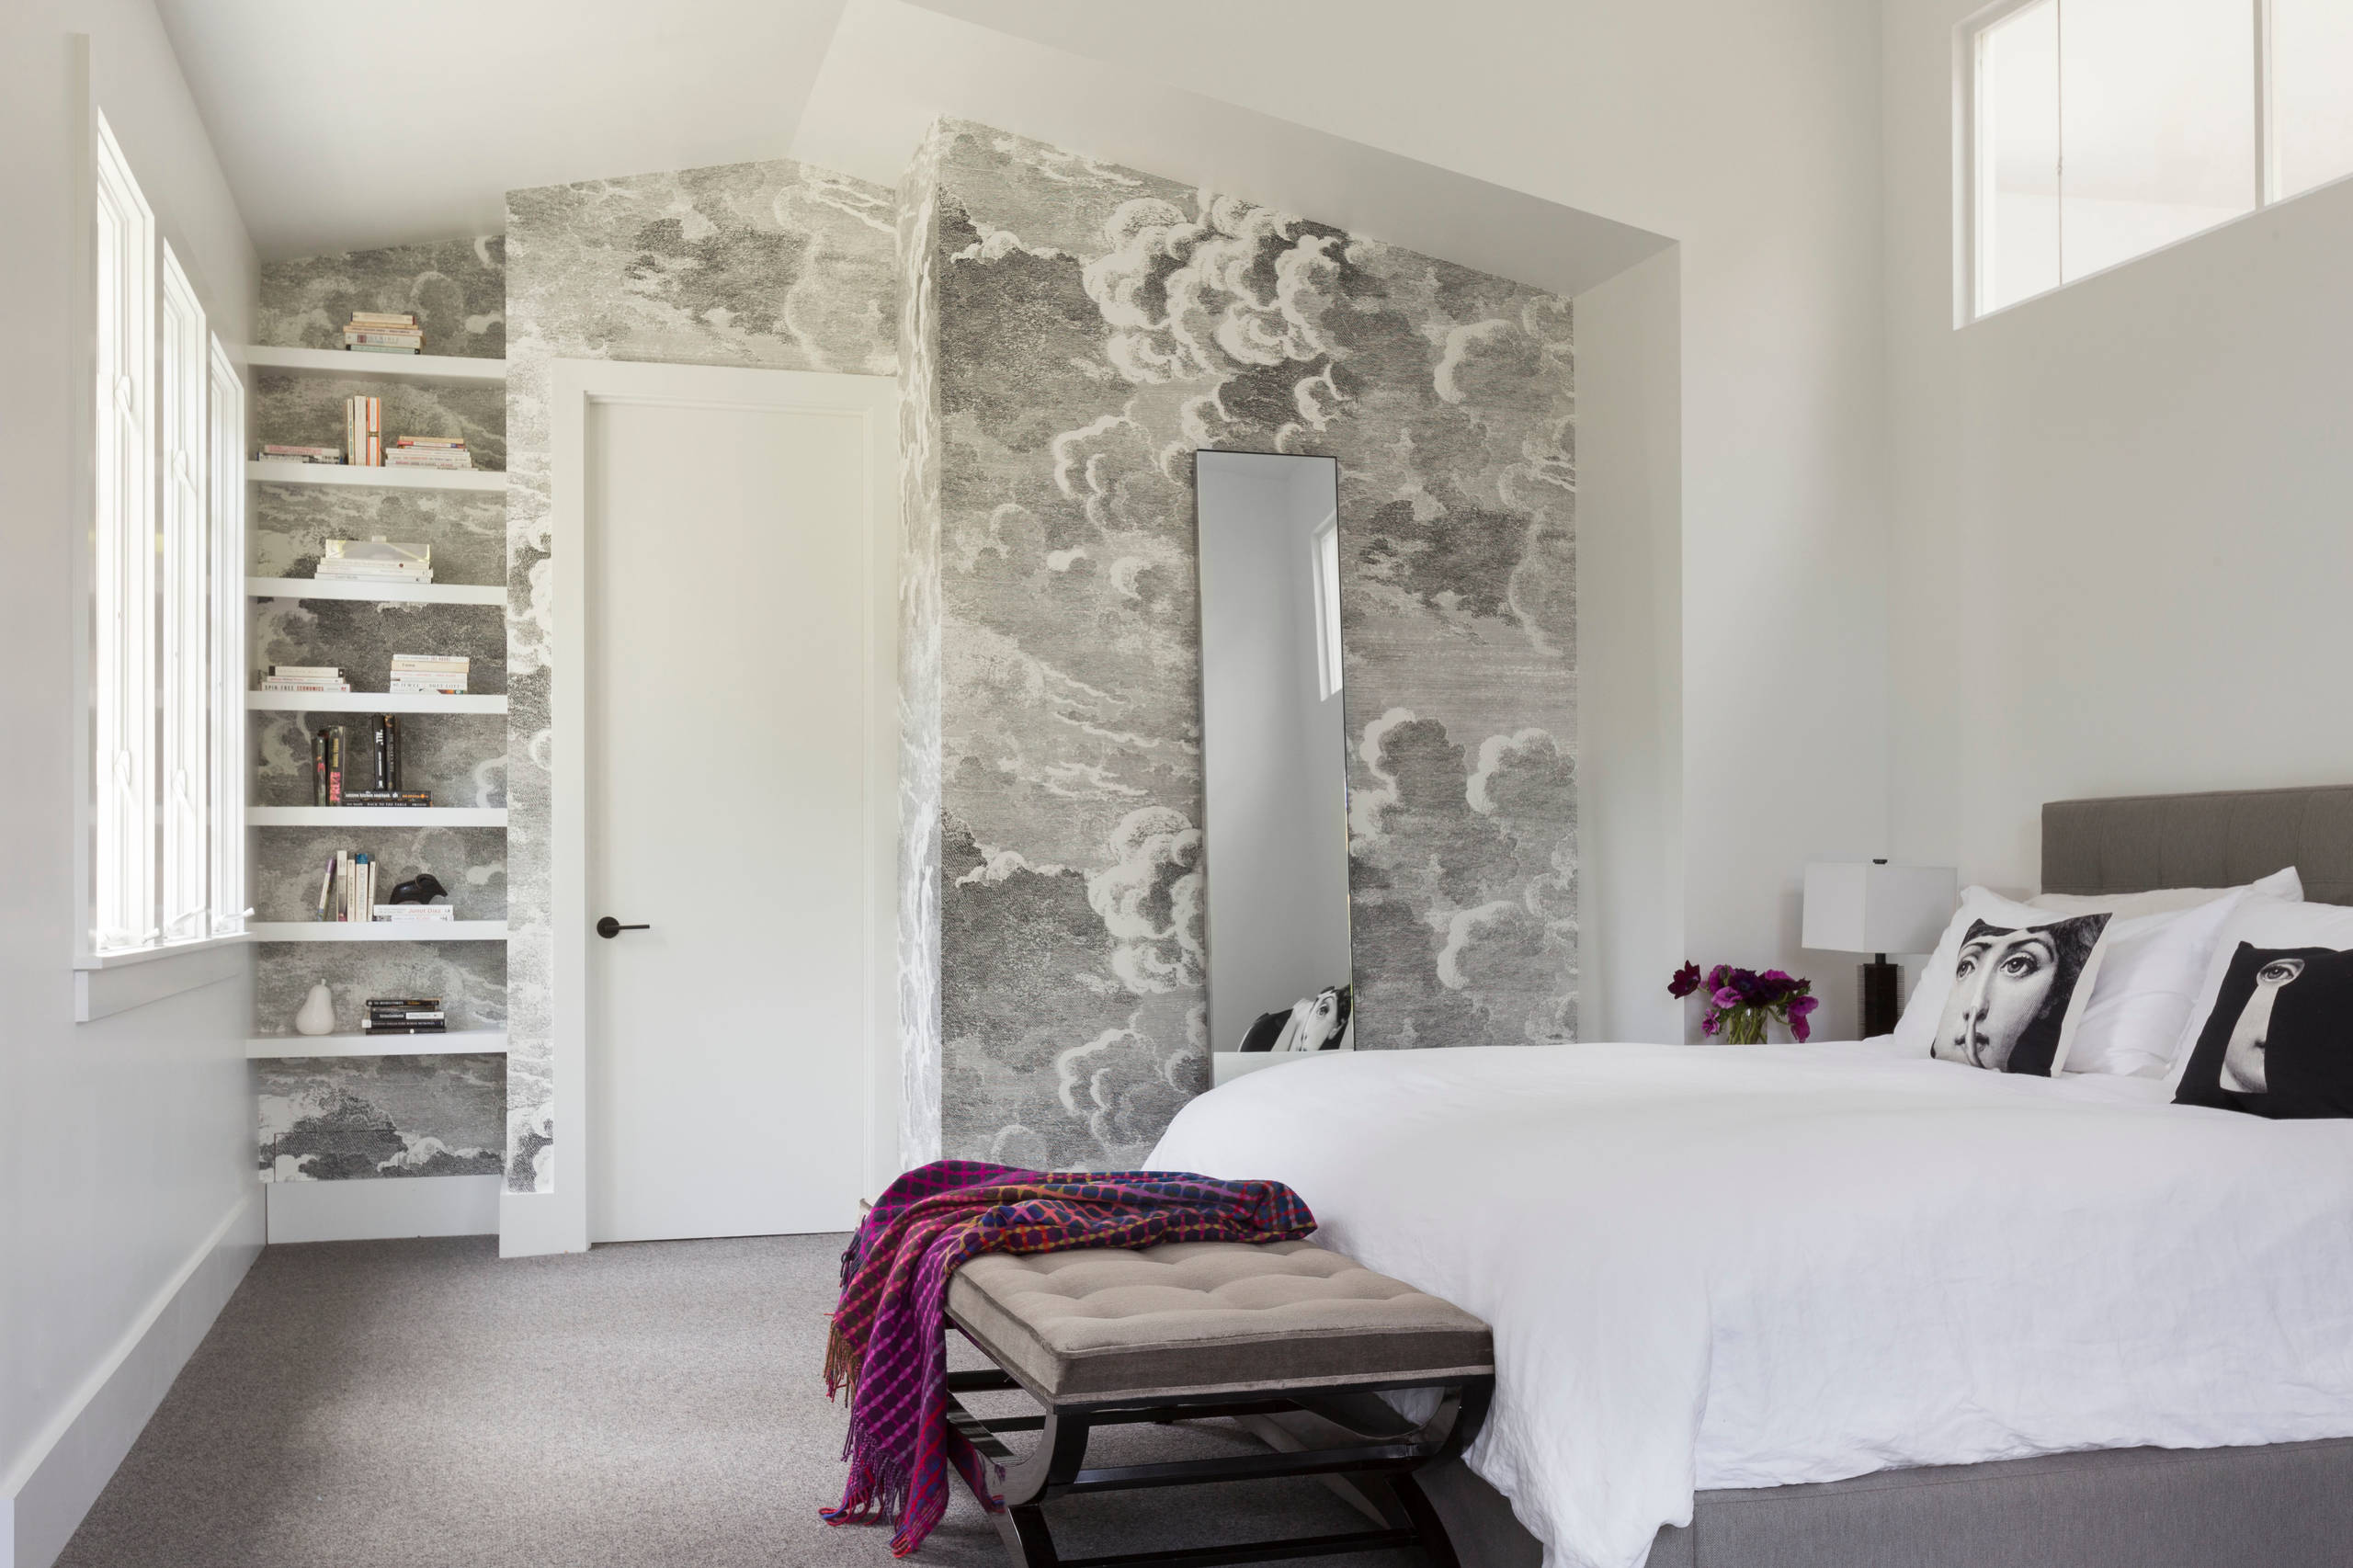 Bedroom Wallpaper Accent Wall - Photos & Ideas | Houzz